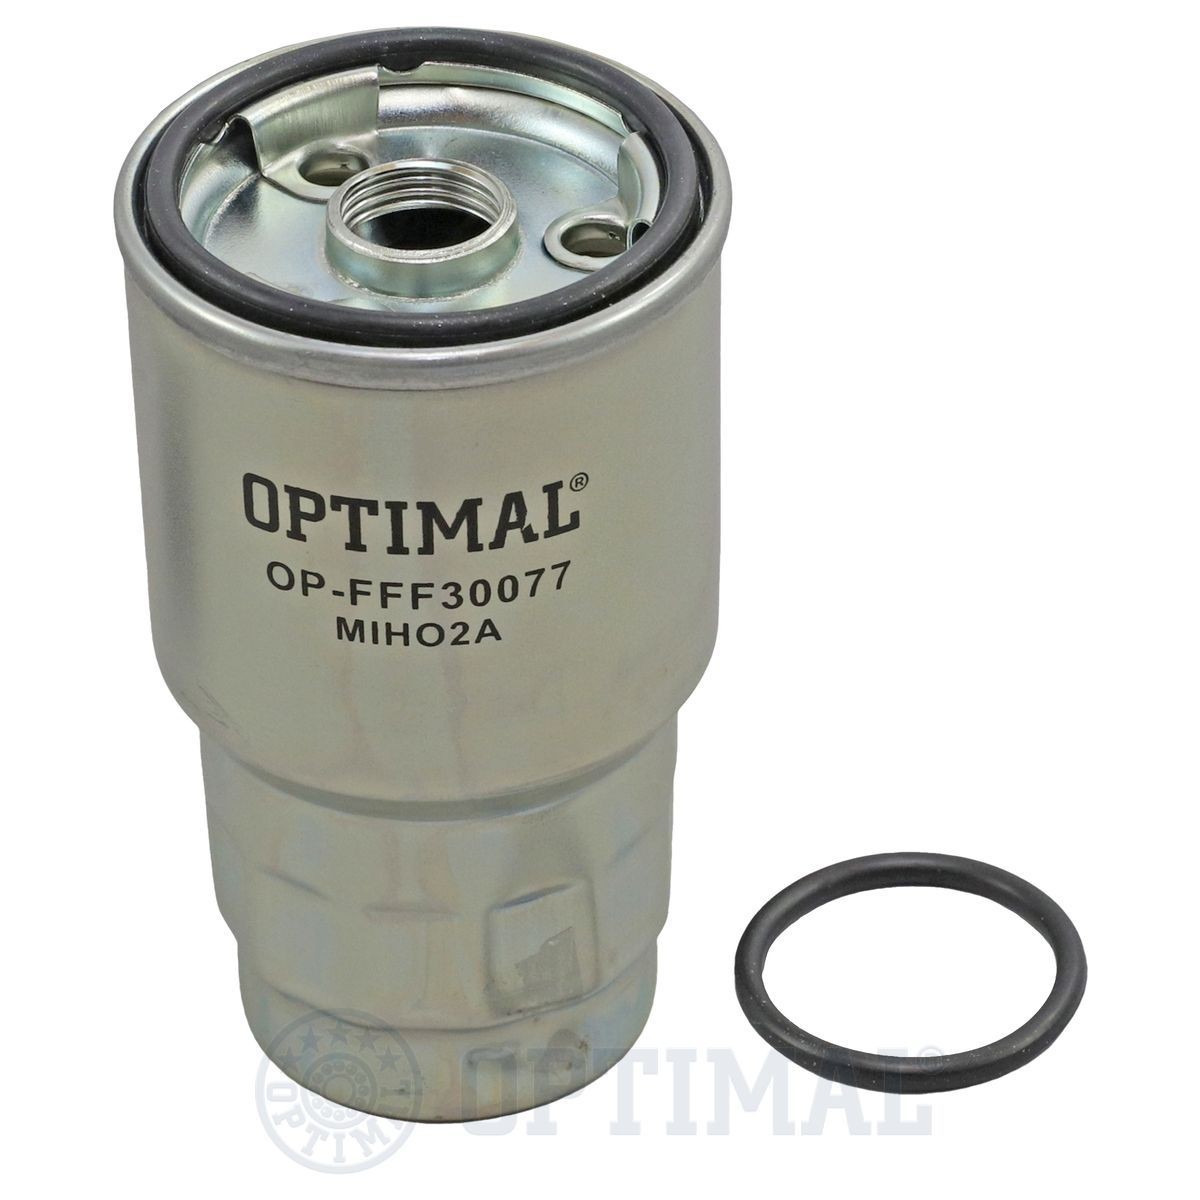 OPTIMAL OP-FFF30077 Fuel filter 23390 YZZAA